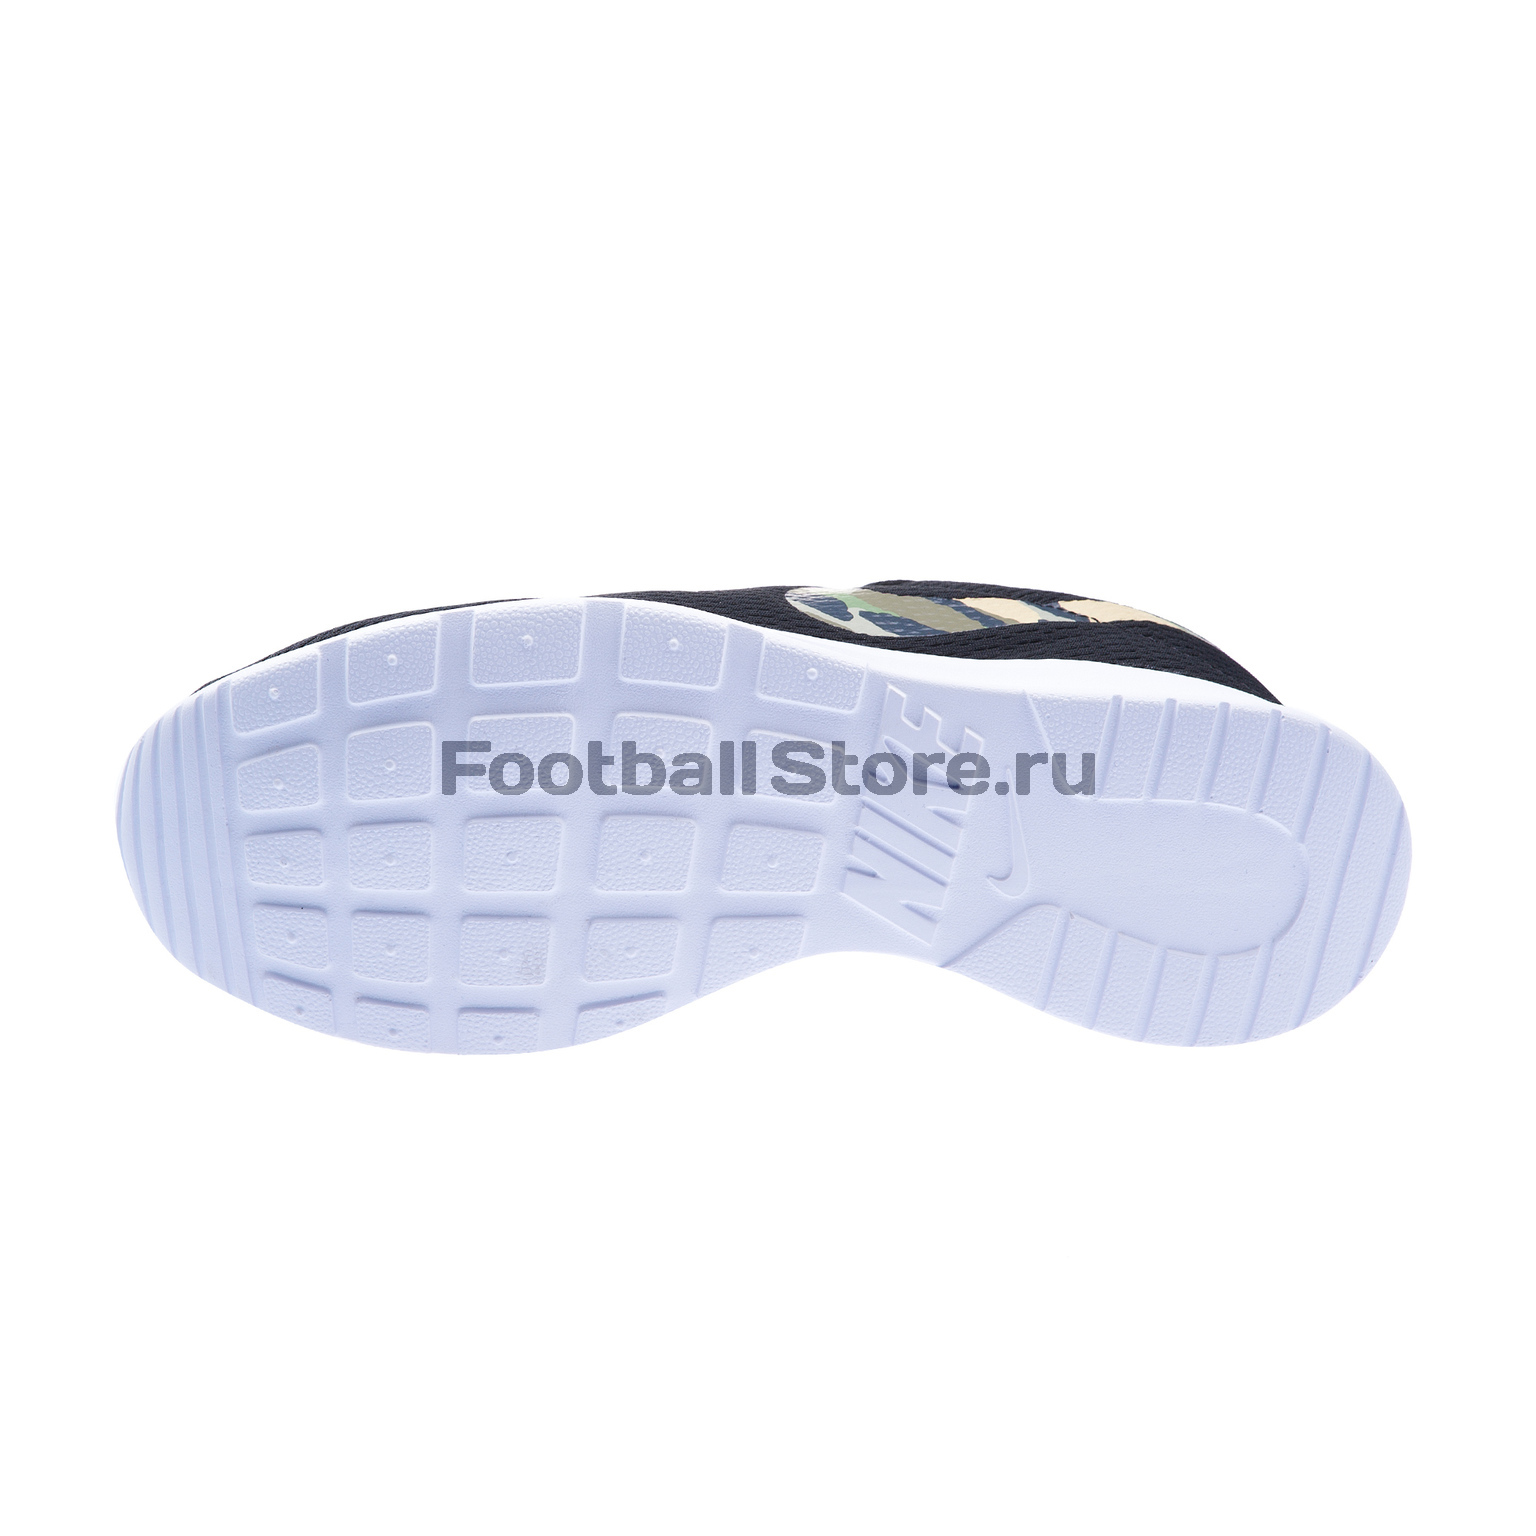 Кроссовки Nike Tanjun Premium 876899-200 